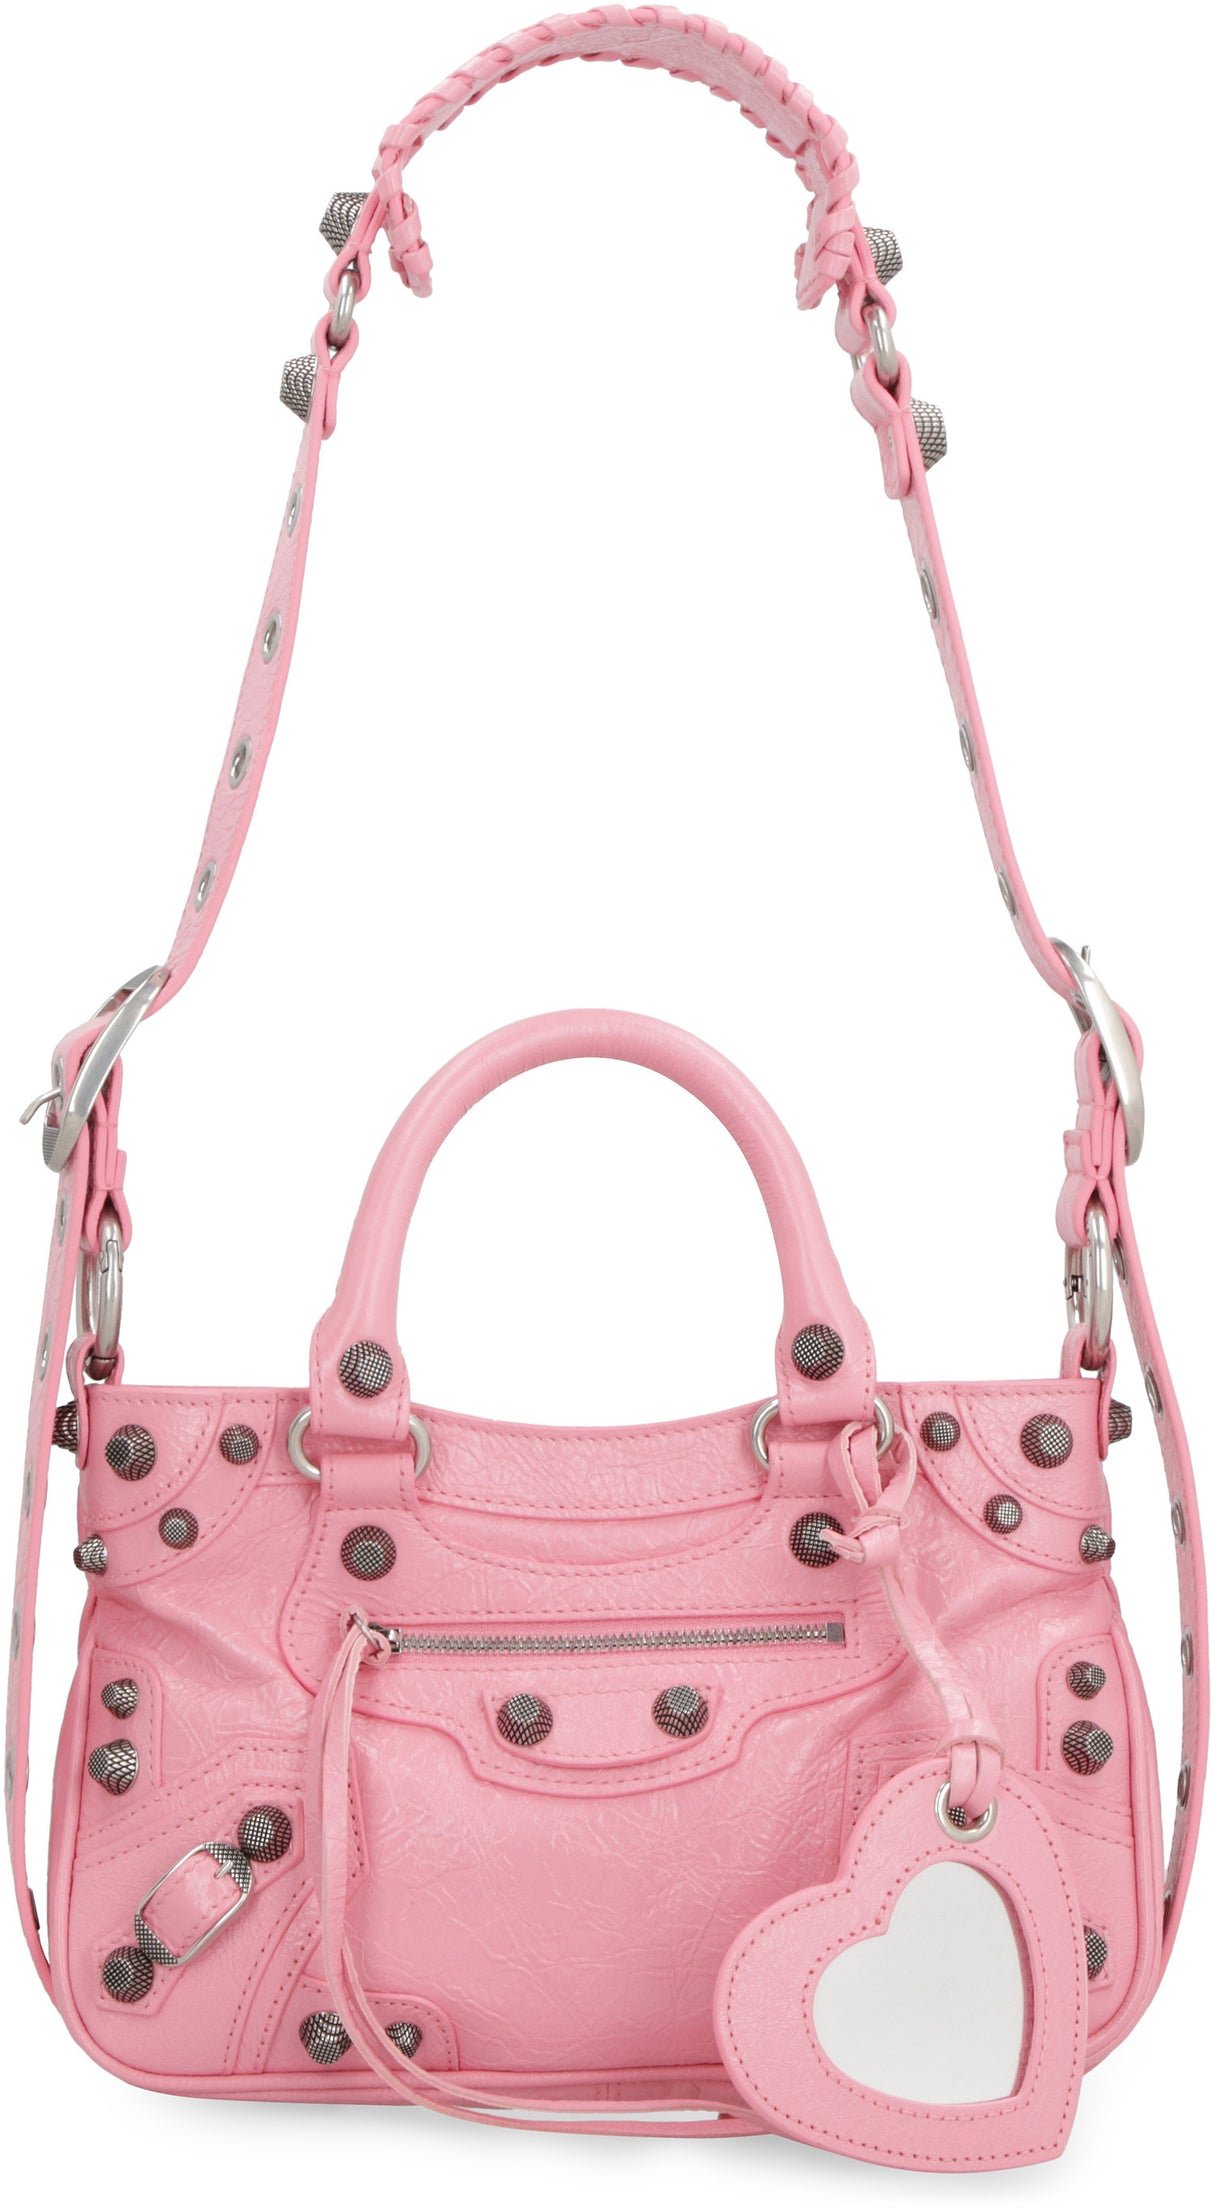 Studded Tote Handbag in Pink - FW23 Season